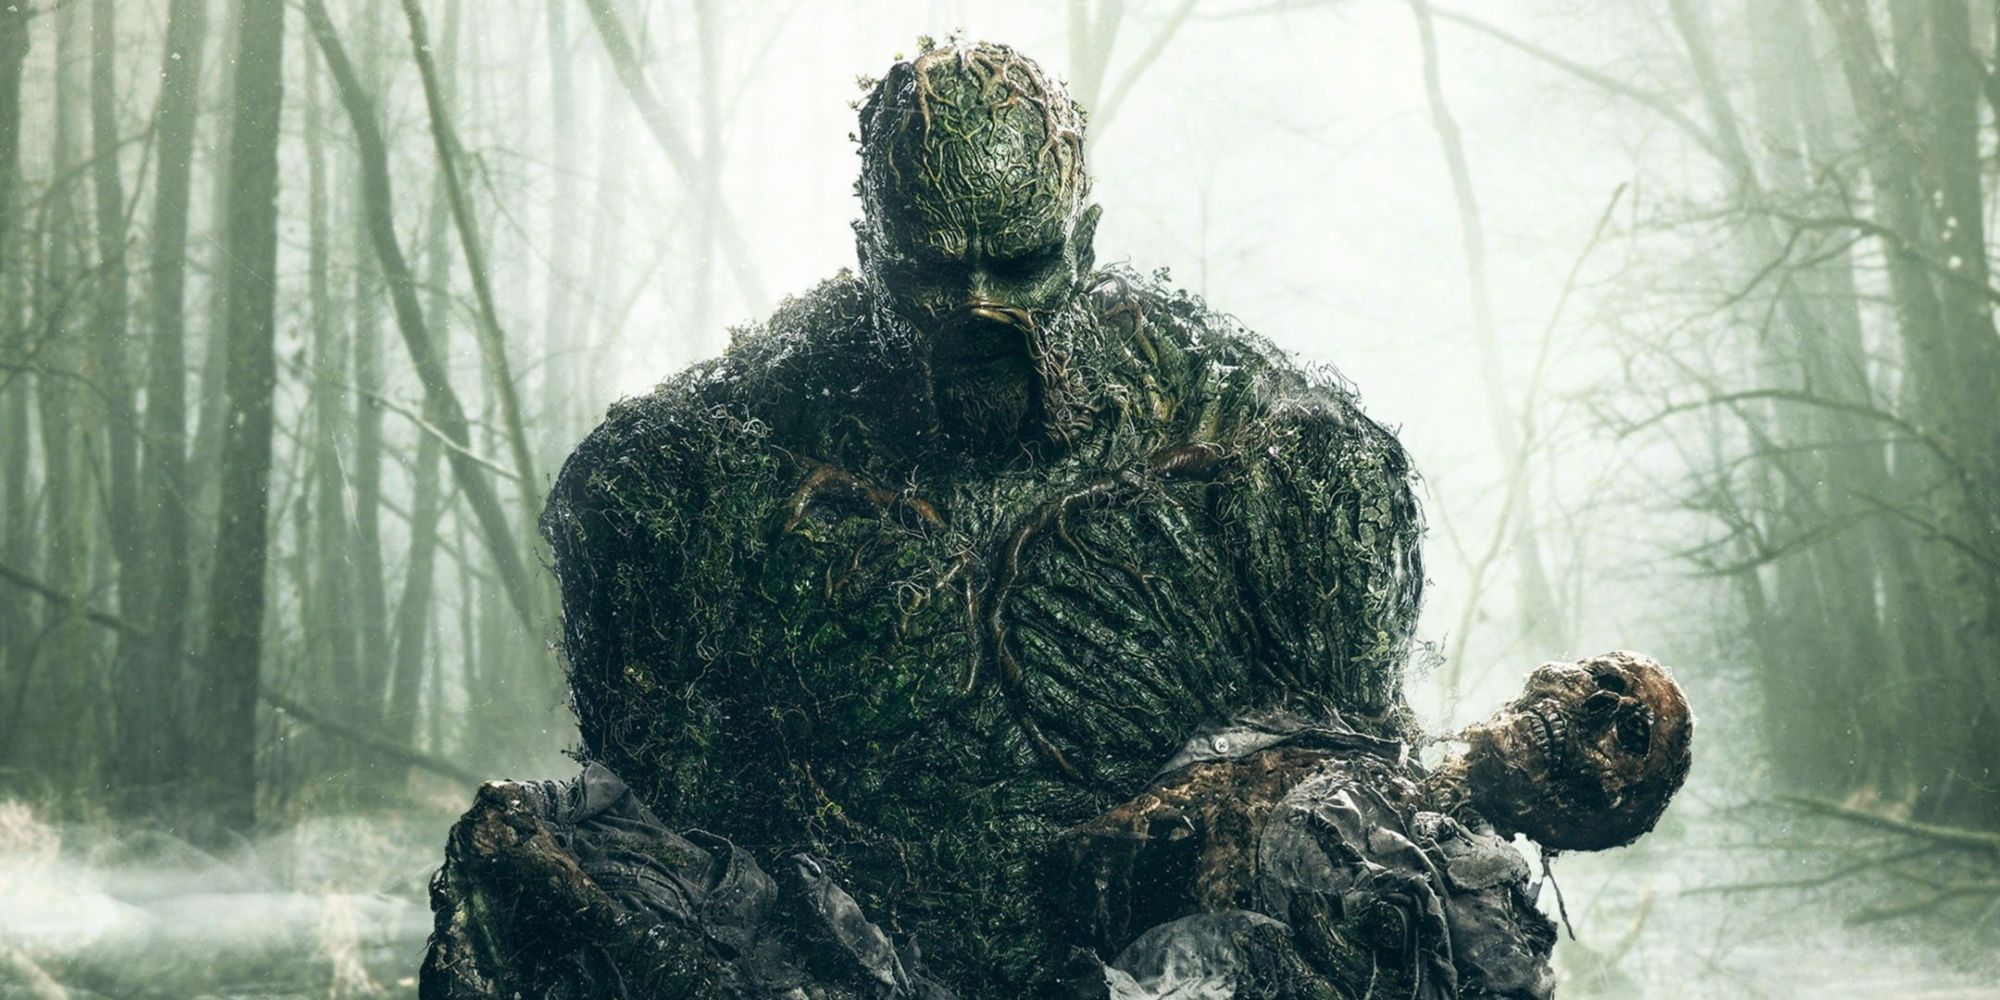 2019 TV show adaptation of DC Comics' Swamp Thing